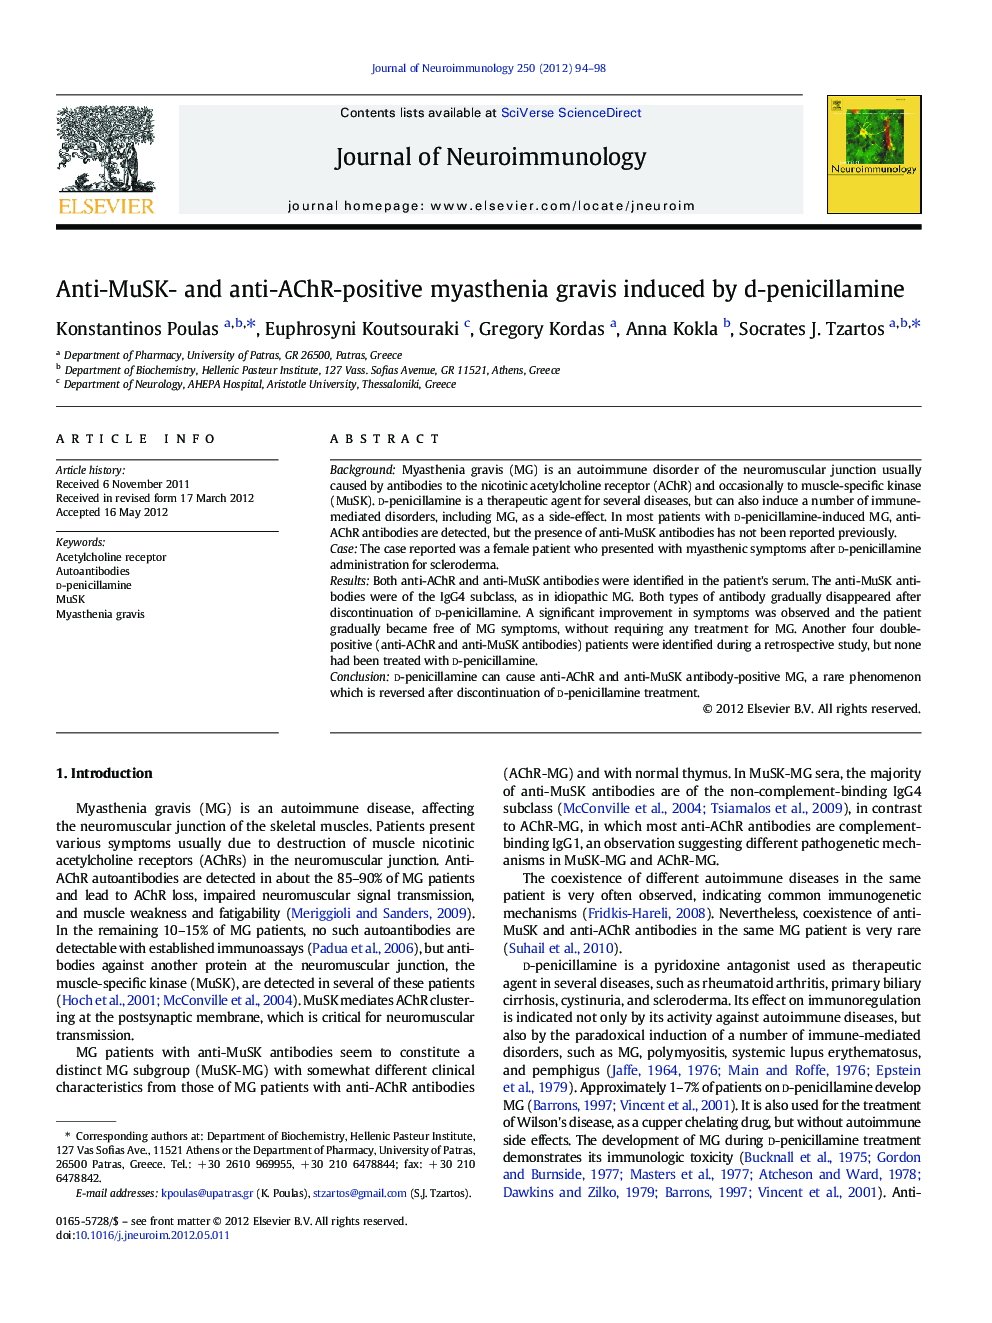 Anti-MuSK- and anti-AChR-positive myasthenia gravis induced by d-penicillamine